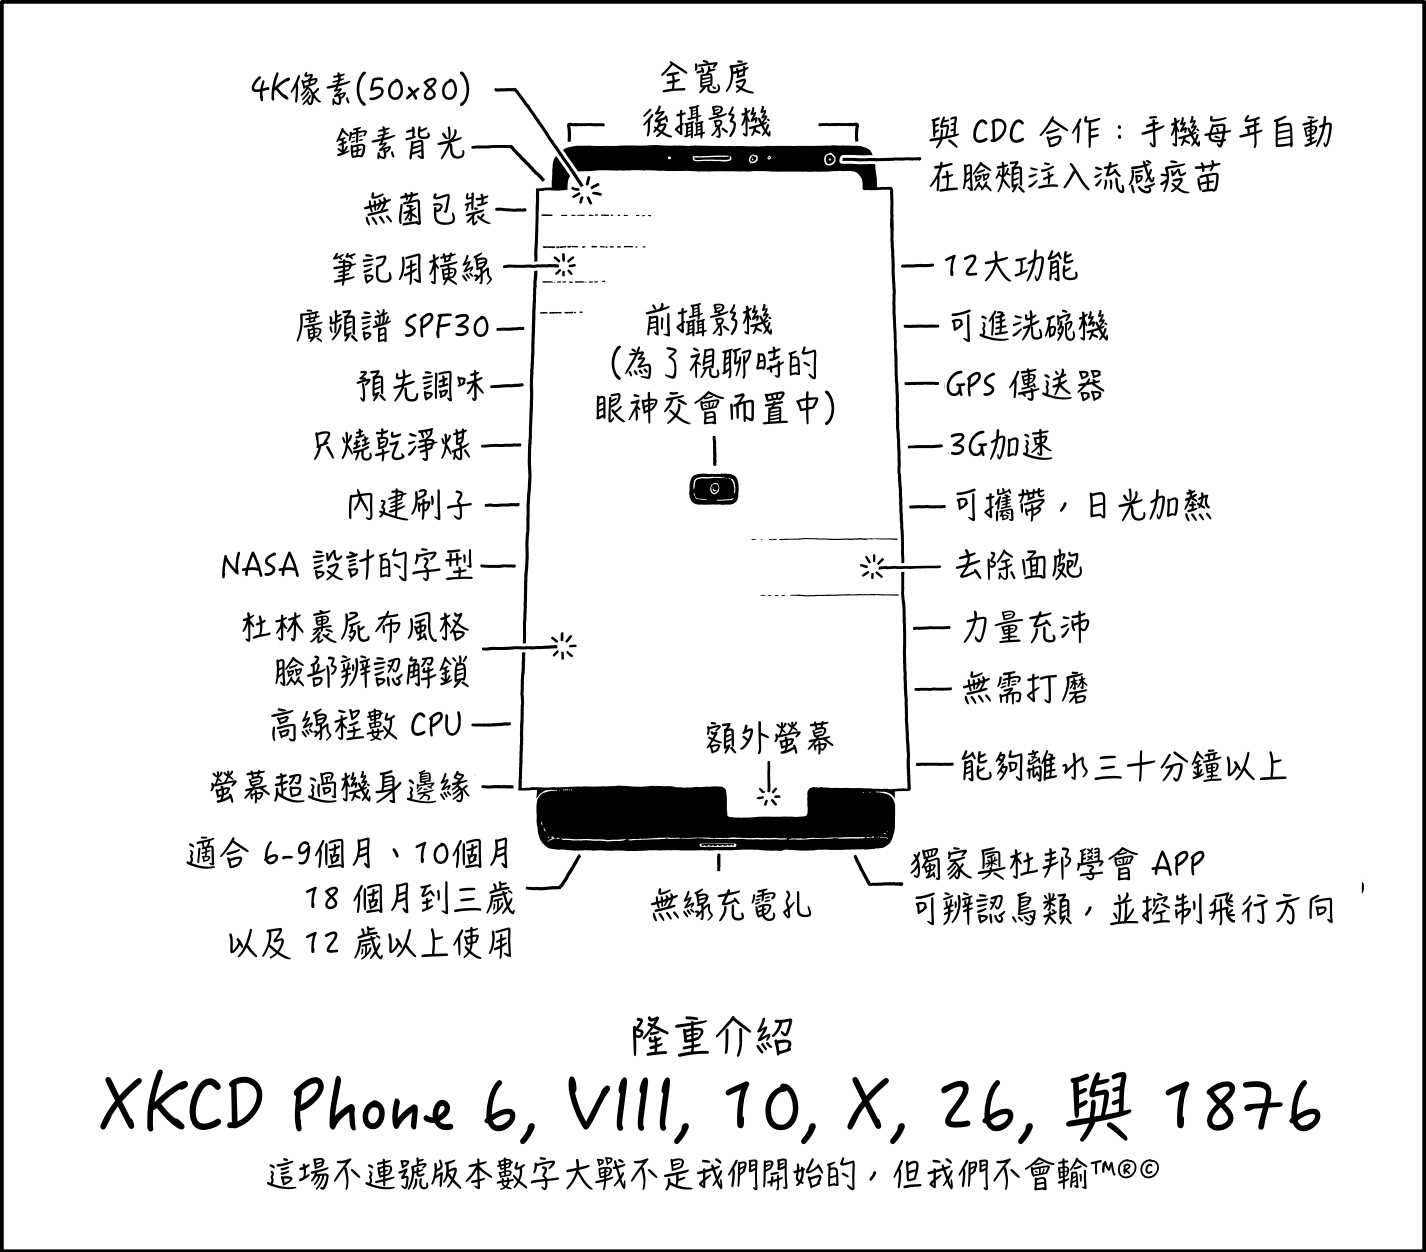 XKCD Phone 6